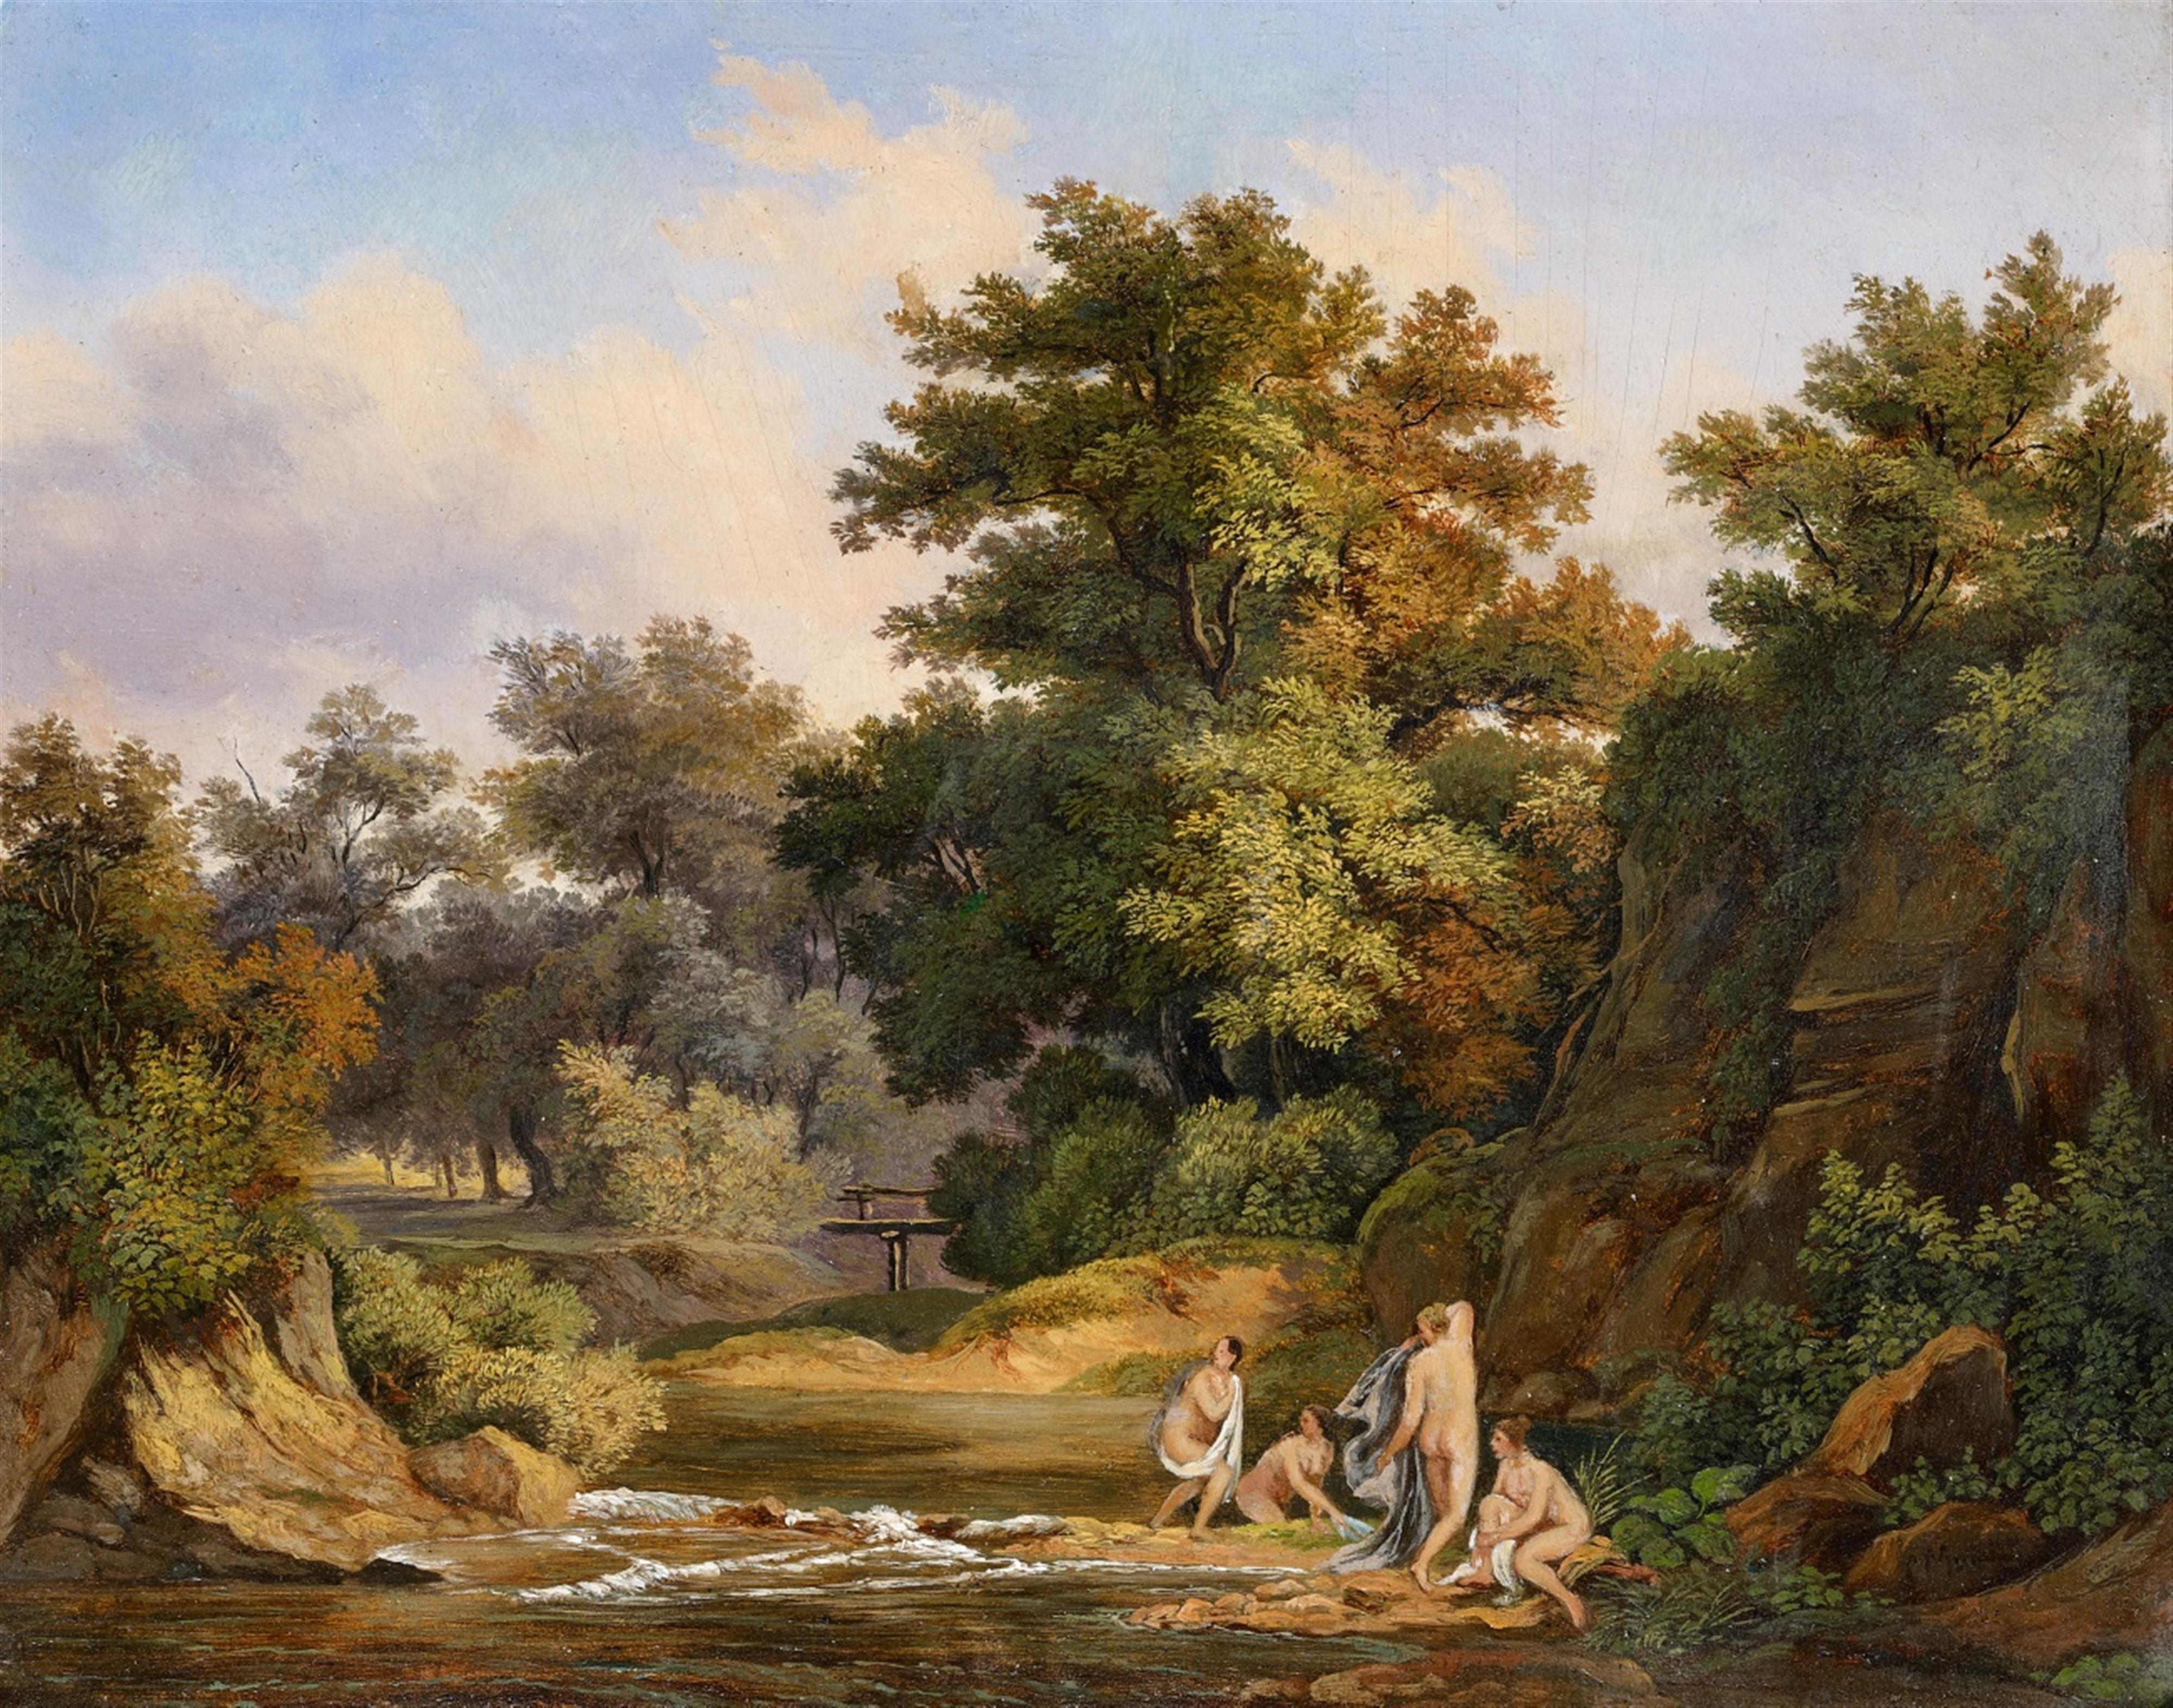 Károly Markó the Elder - Nymphs Bathing in a Wooded Landscape